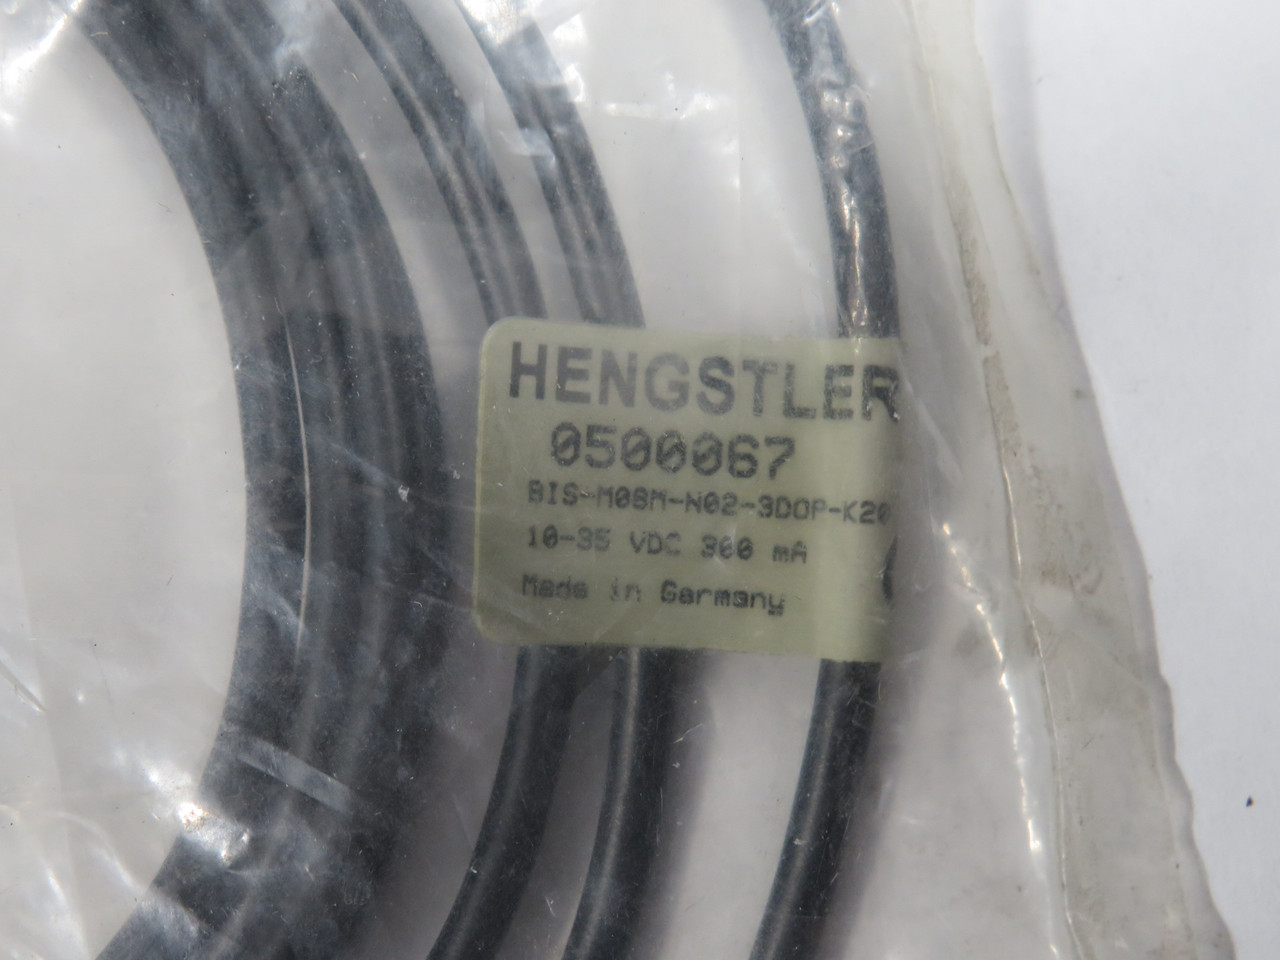 Hengstler BIS-M08M-N02-3DOP-K20 Proximity Switch 10-35VDC 300mA 0500067 NOP